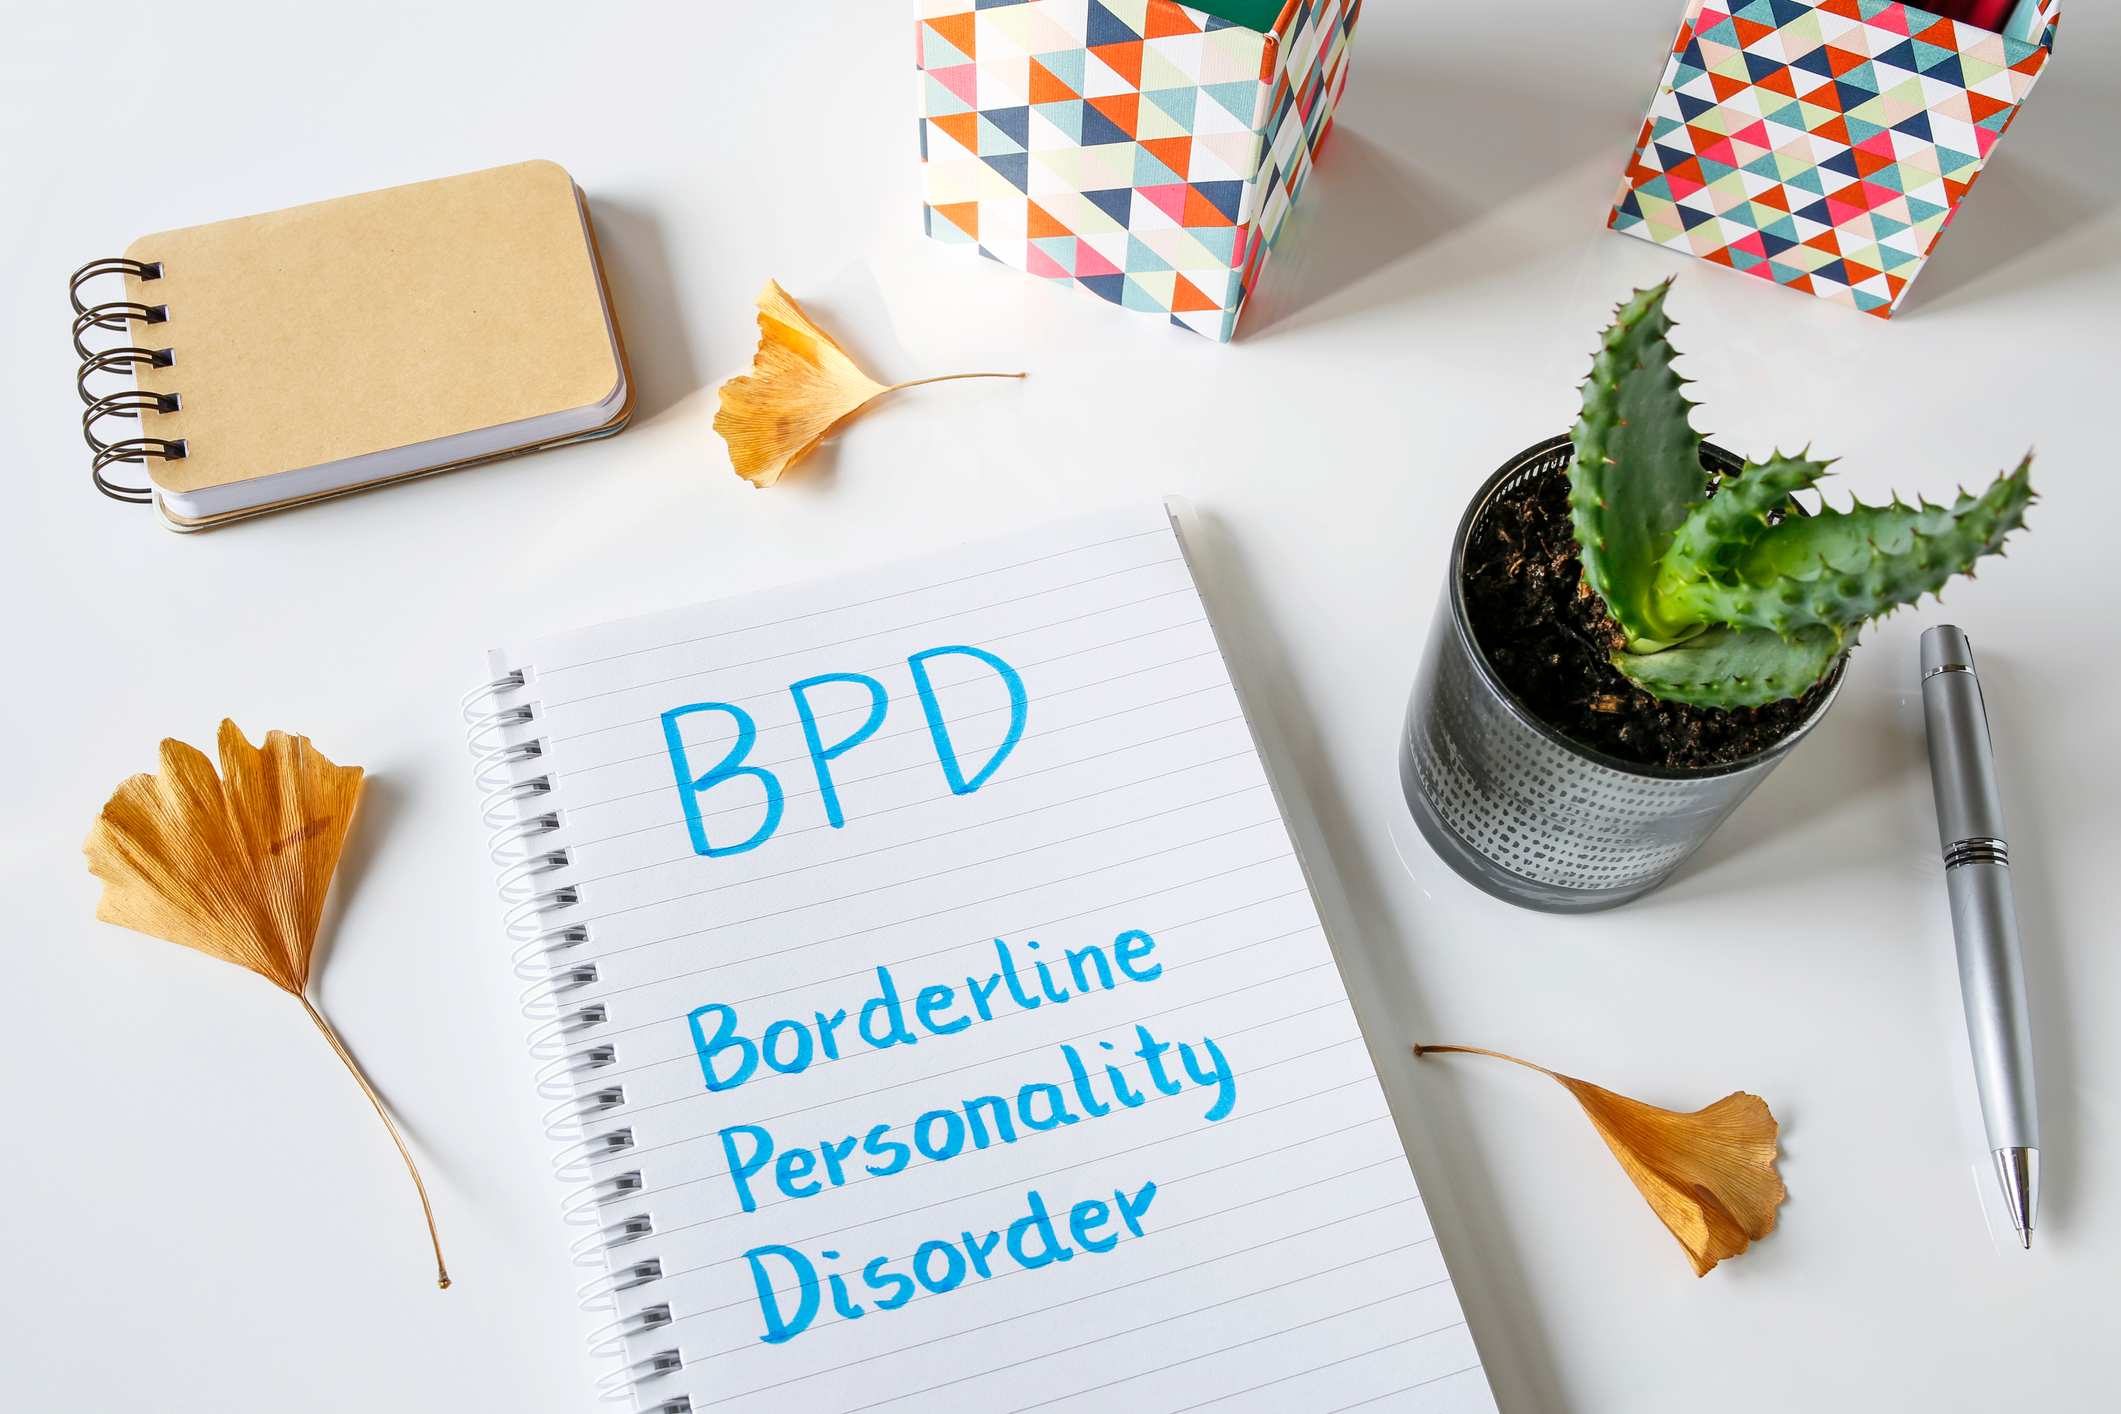 The enduring stigma surrounding Borderline Personality Disorder